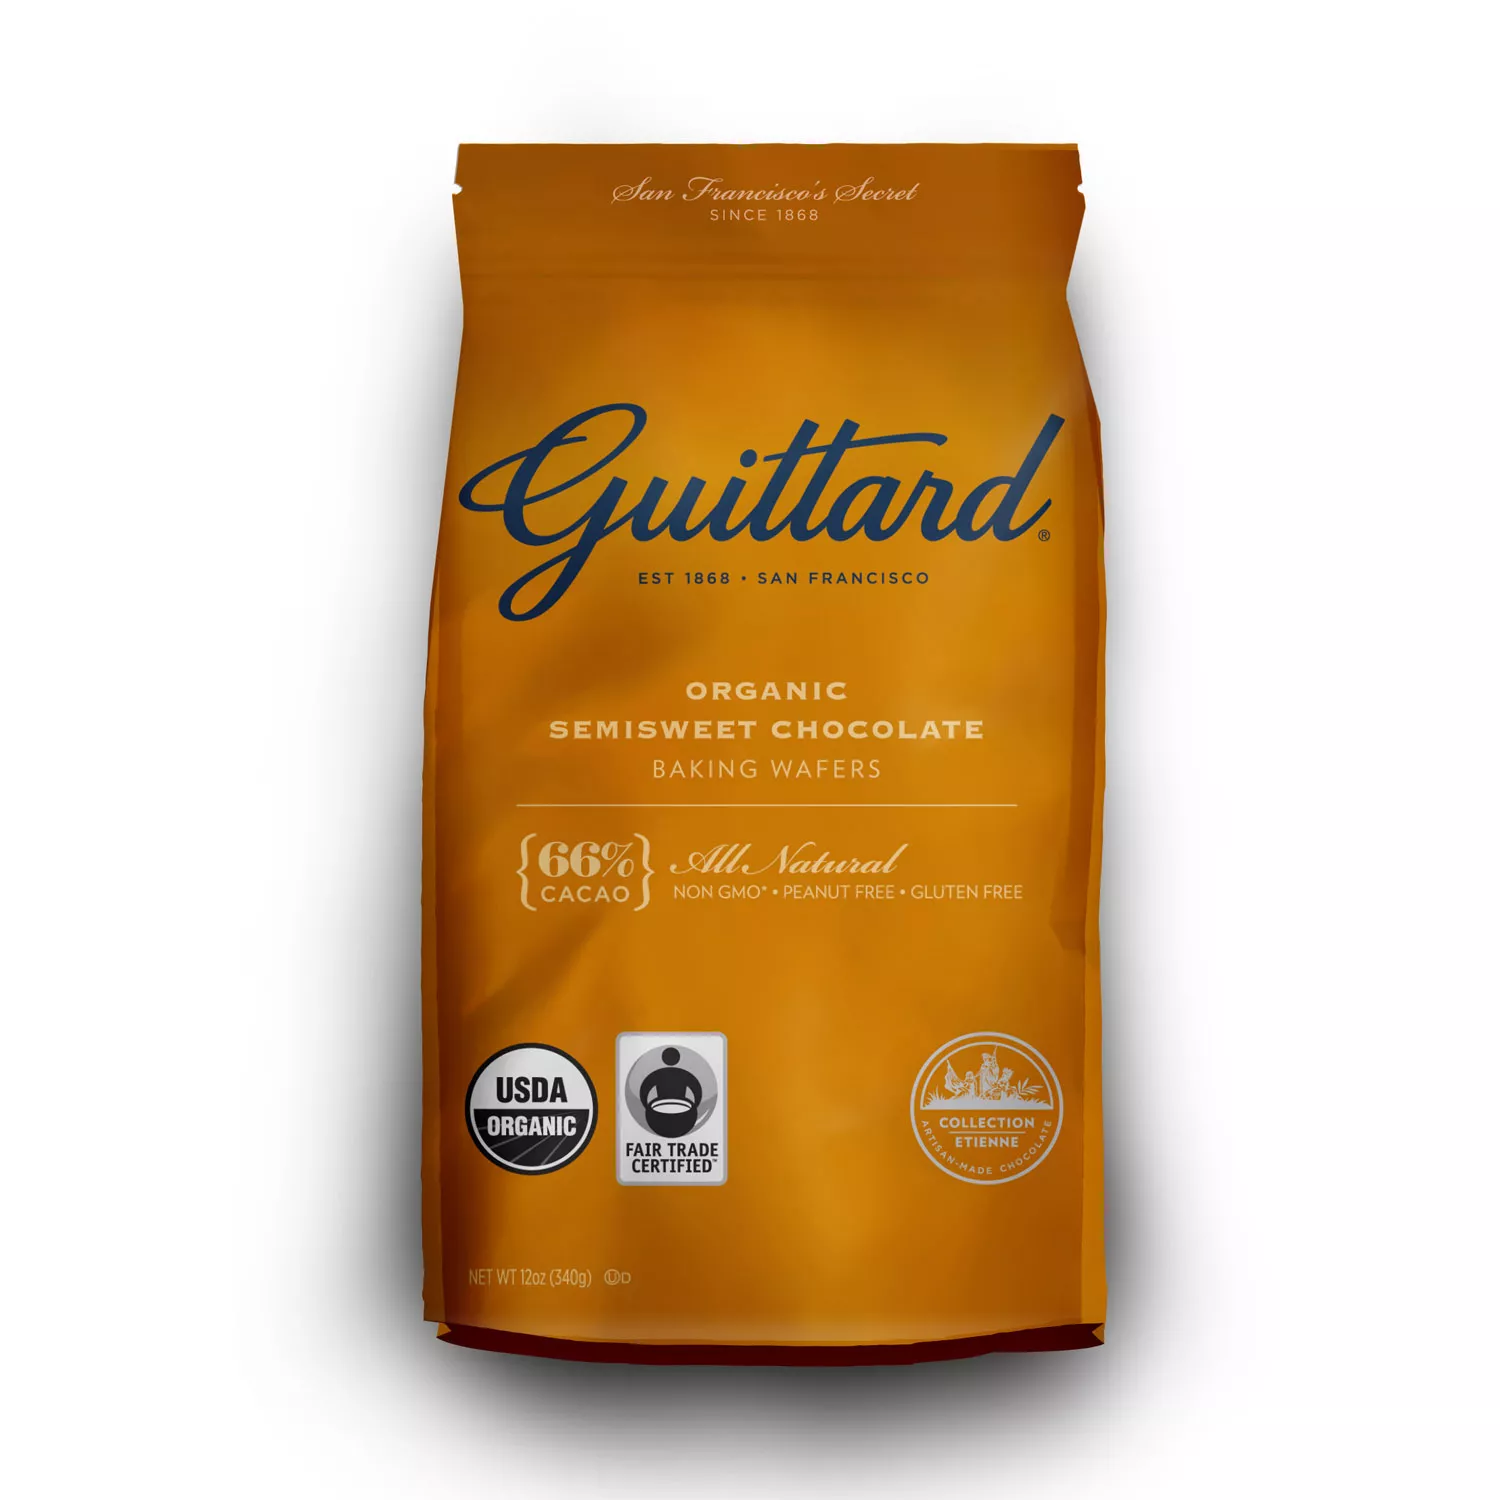 Guittard Organic Semisweet Chocolate Baking Wafers, 66%